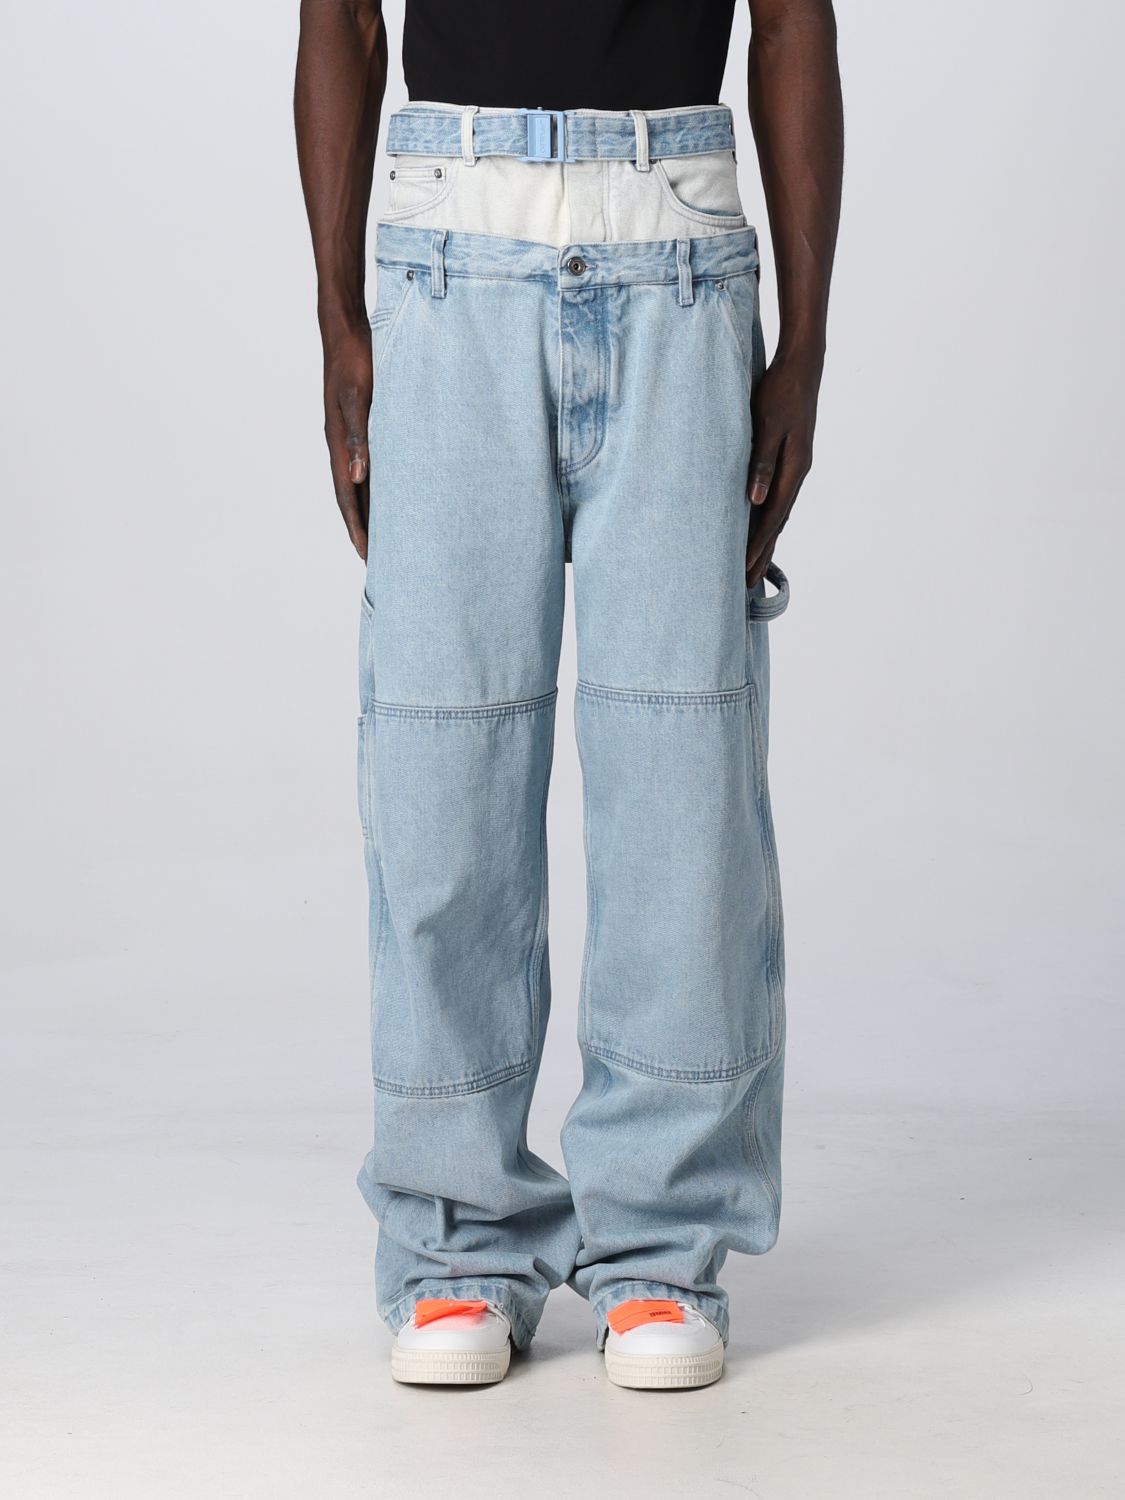 Off-White Outlet: denim jeans - Denim | Off-White jeans ...